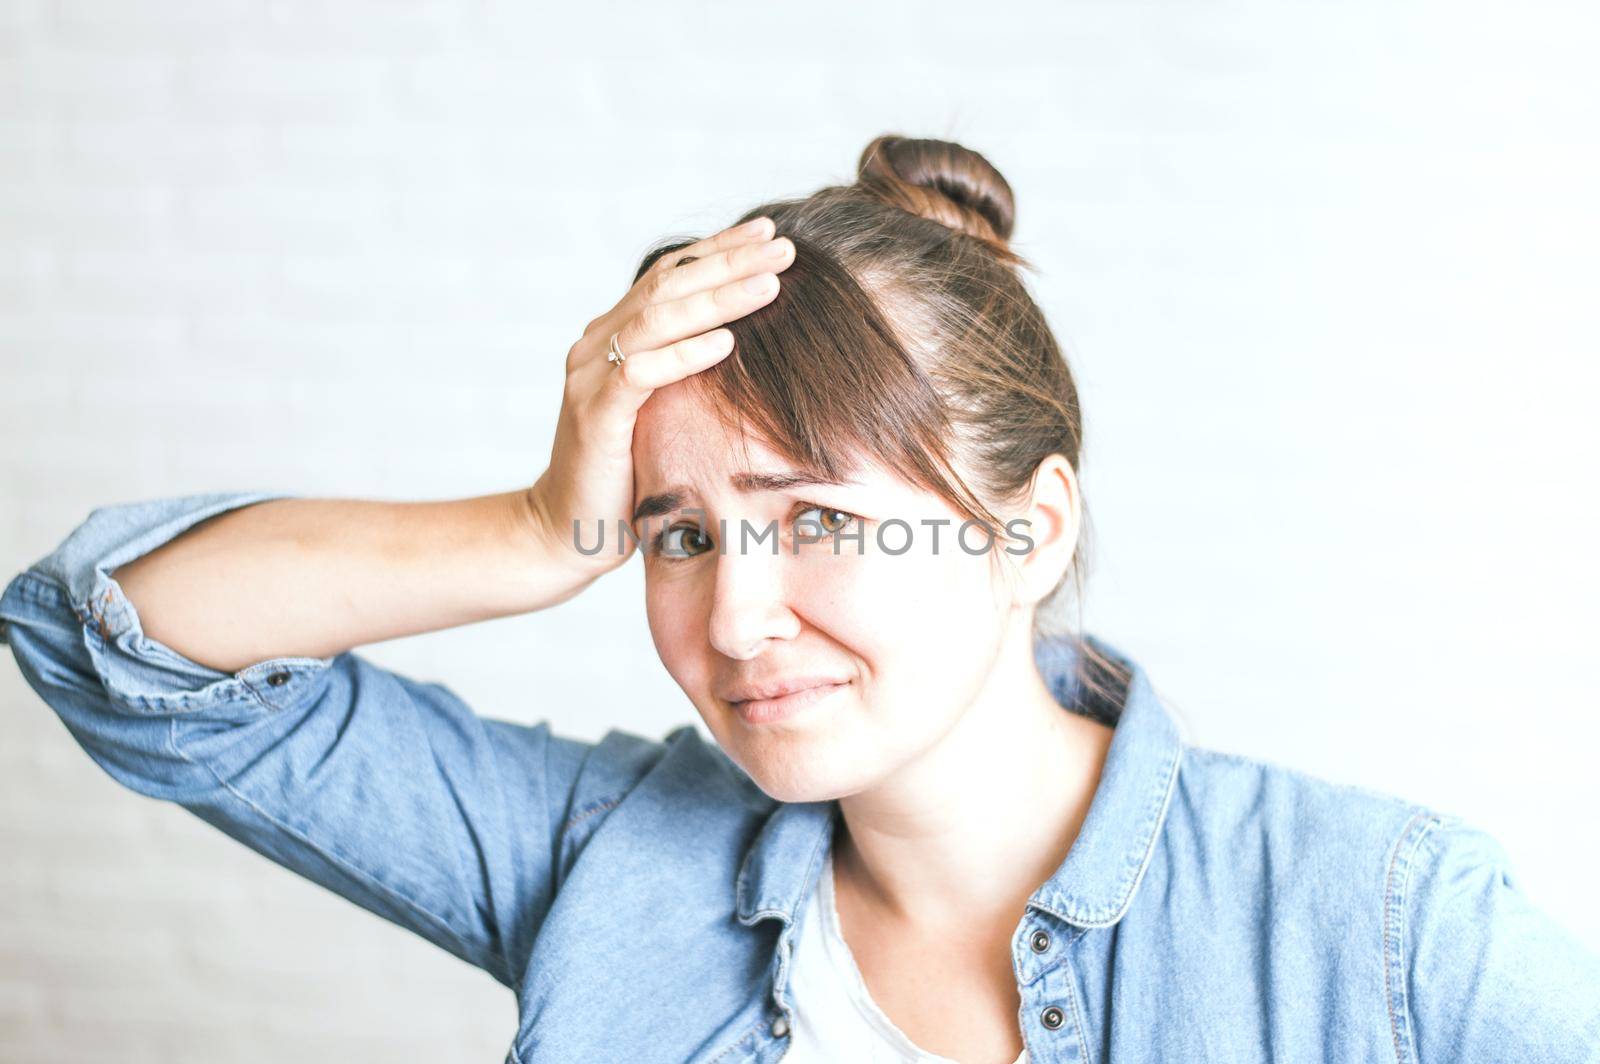 upset emotional woman on a light background by maramorosz